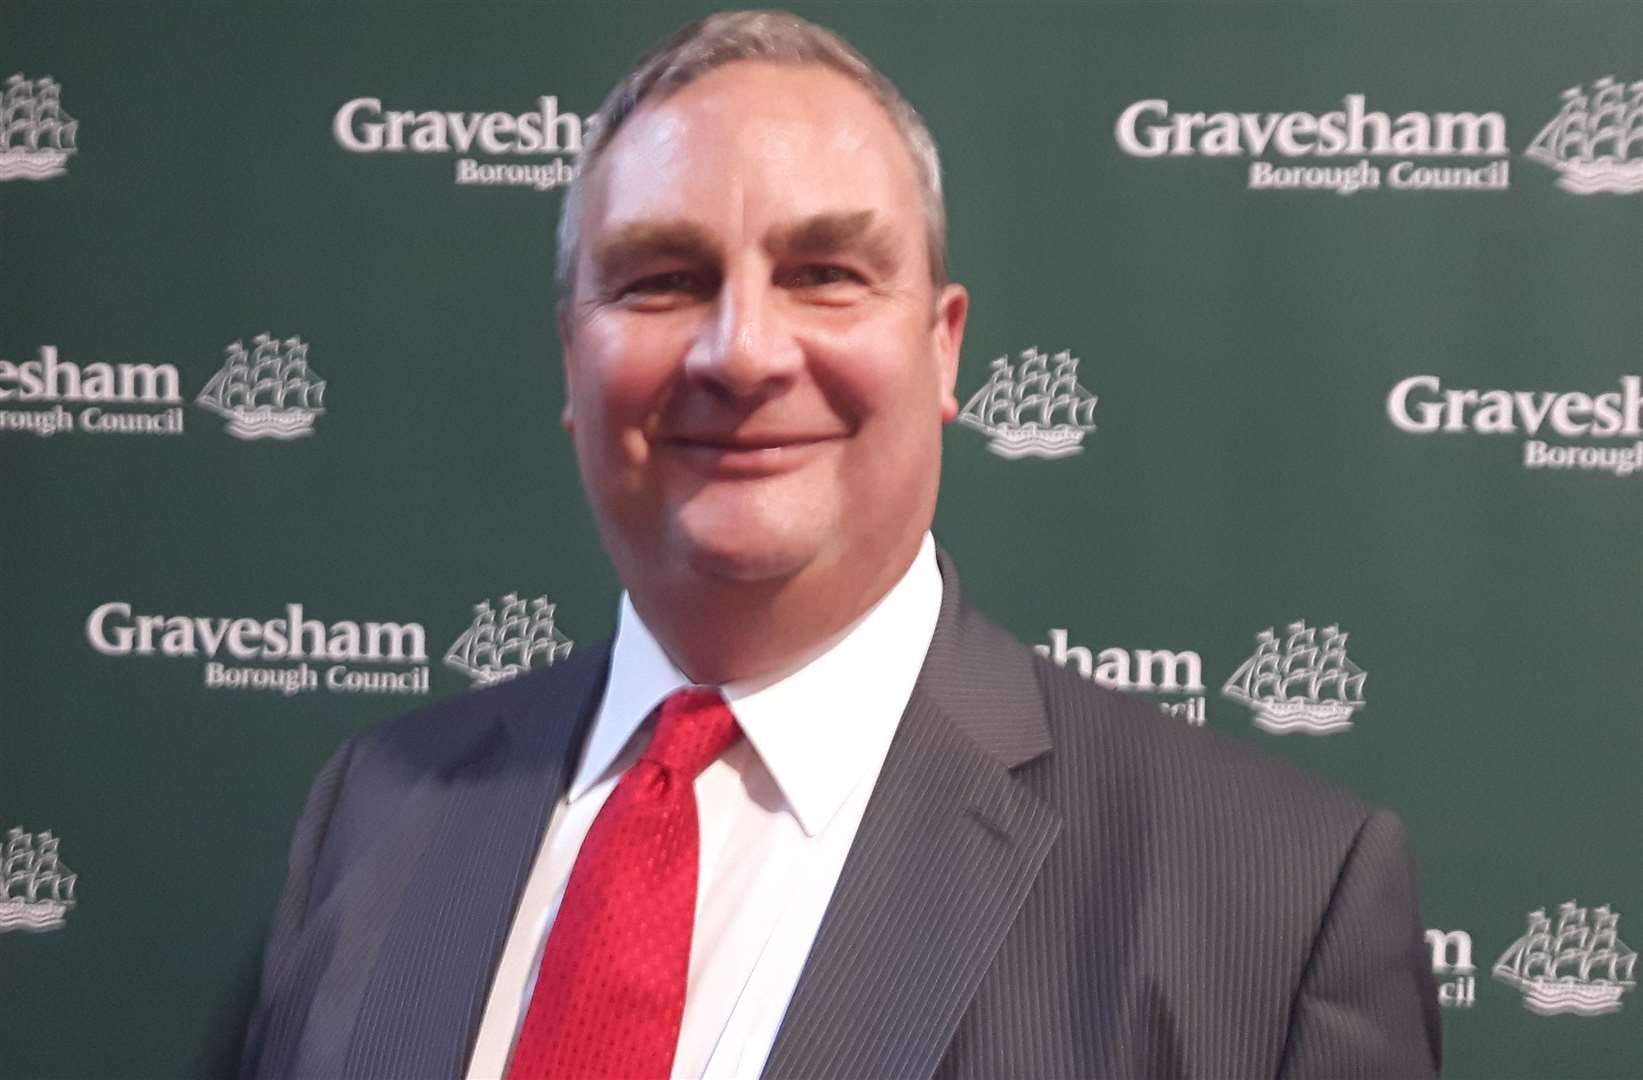 Gravesham Borough Council leader John Burden